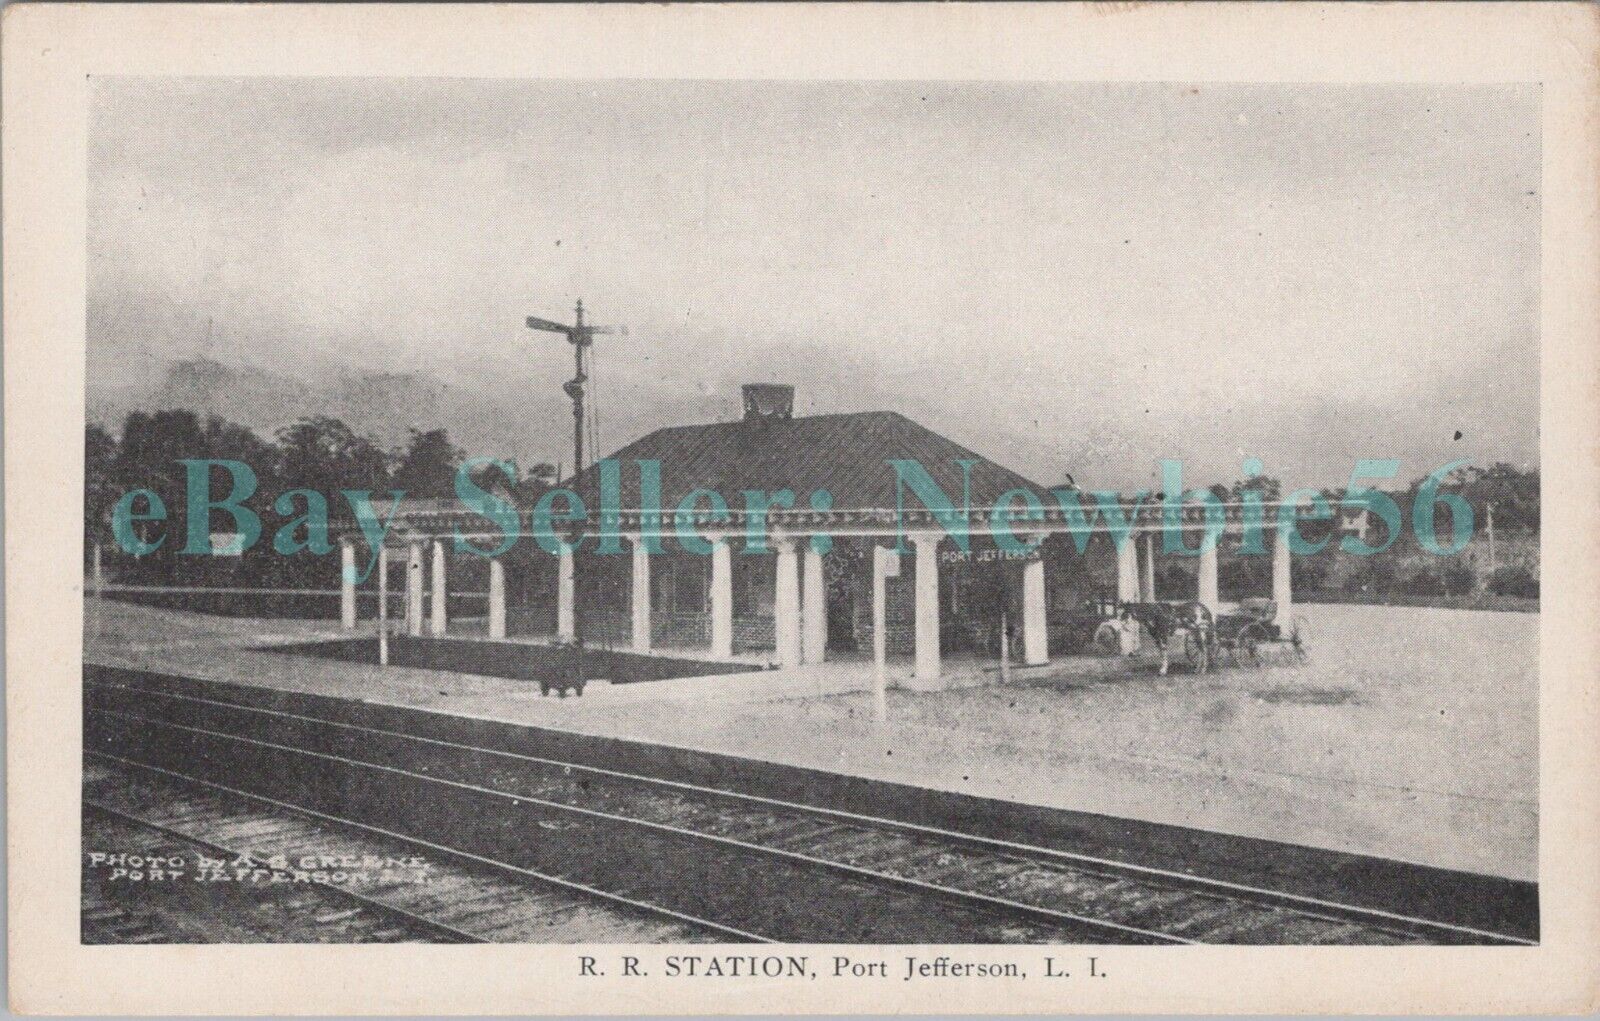 Port Jefferson LI NY - RAILROAD STATION - Postcard